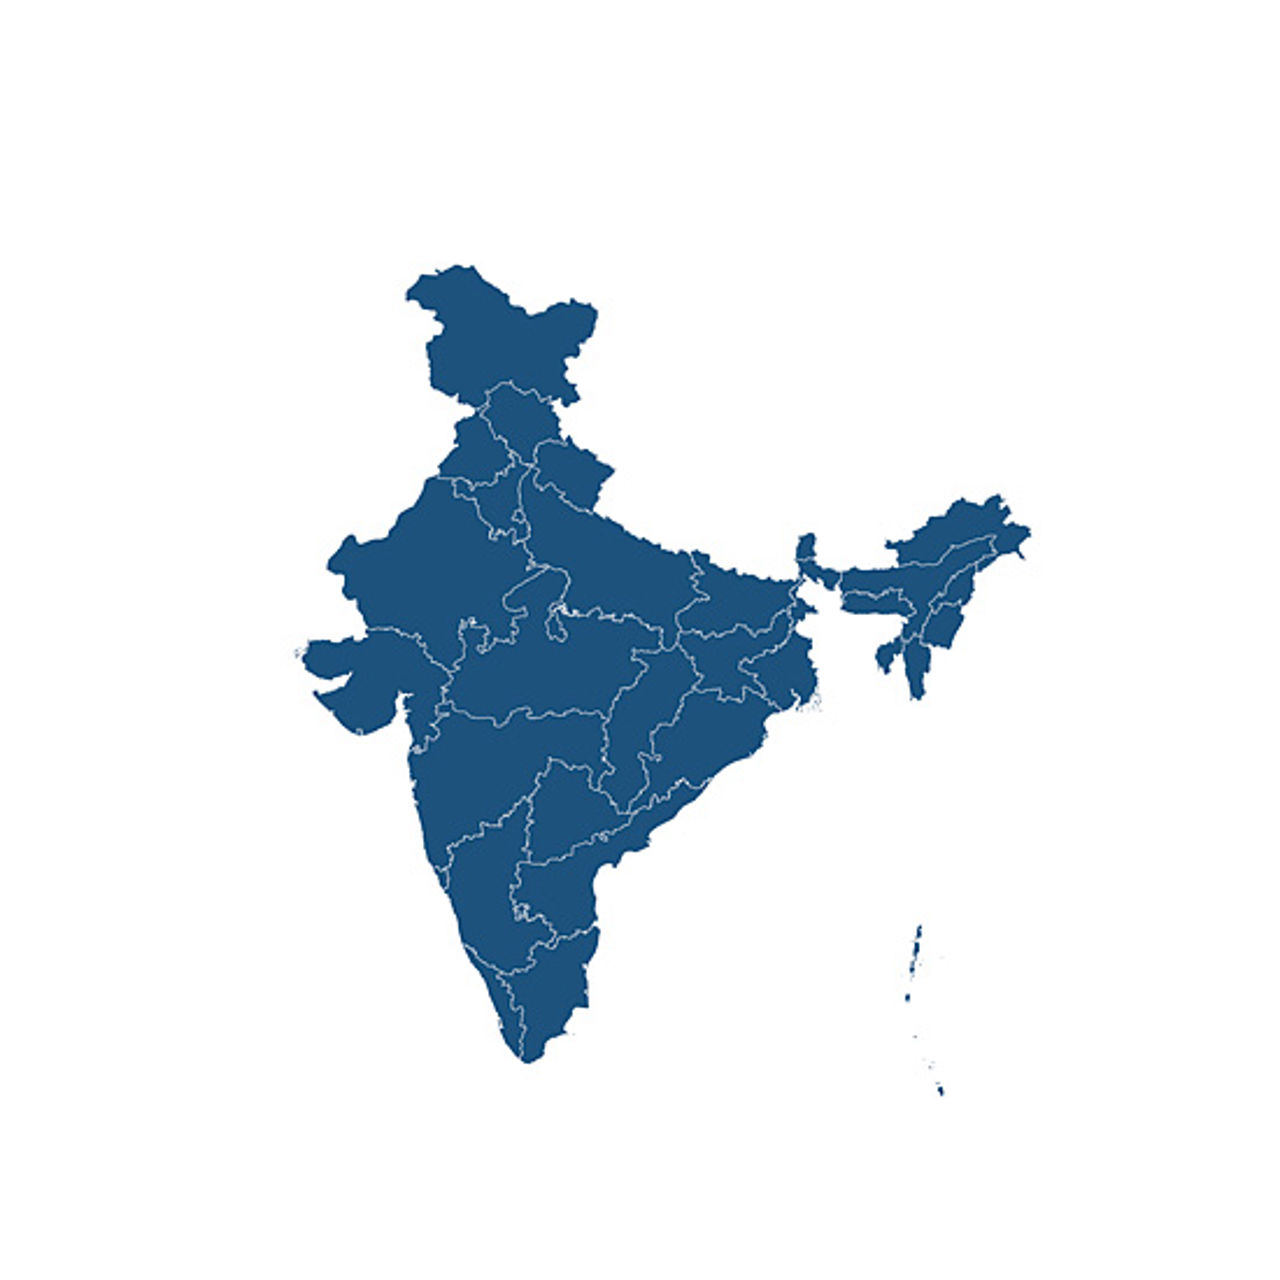 Kart over India